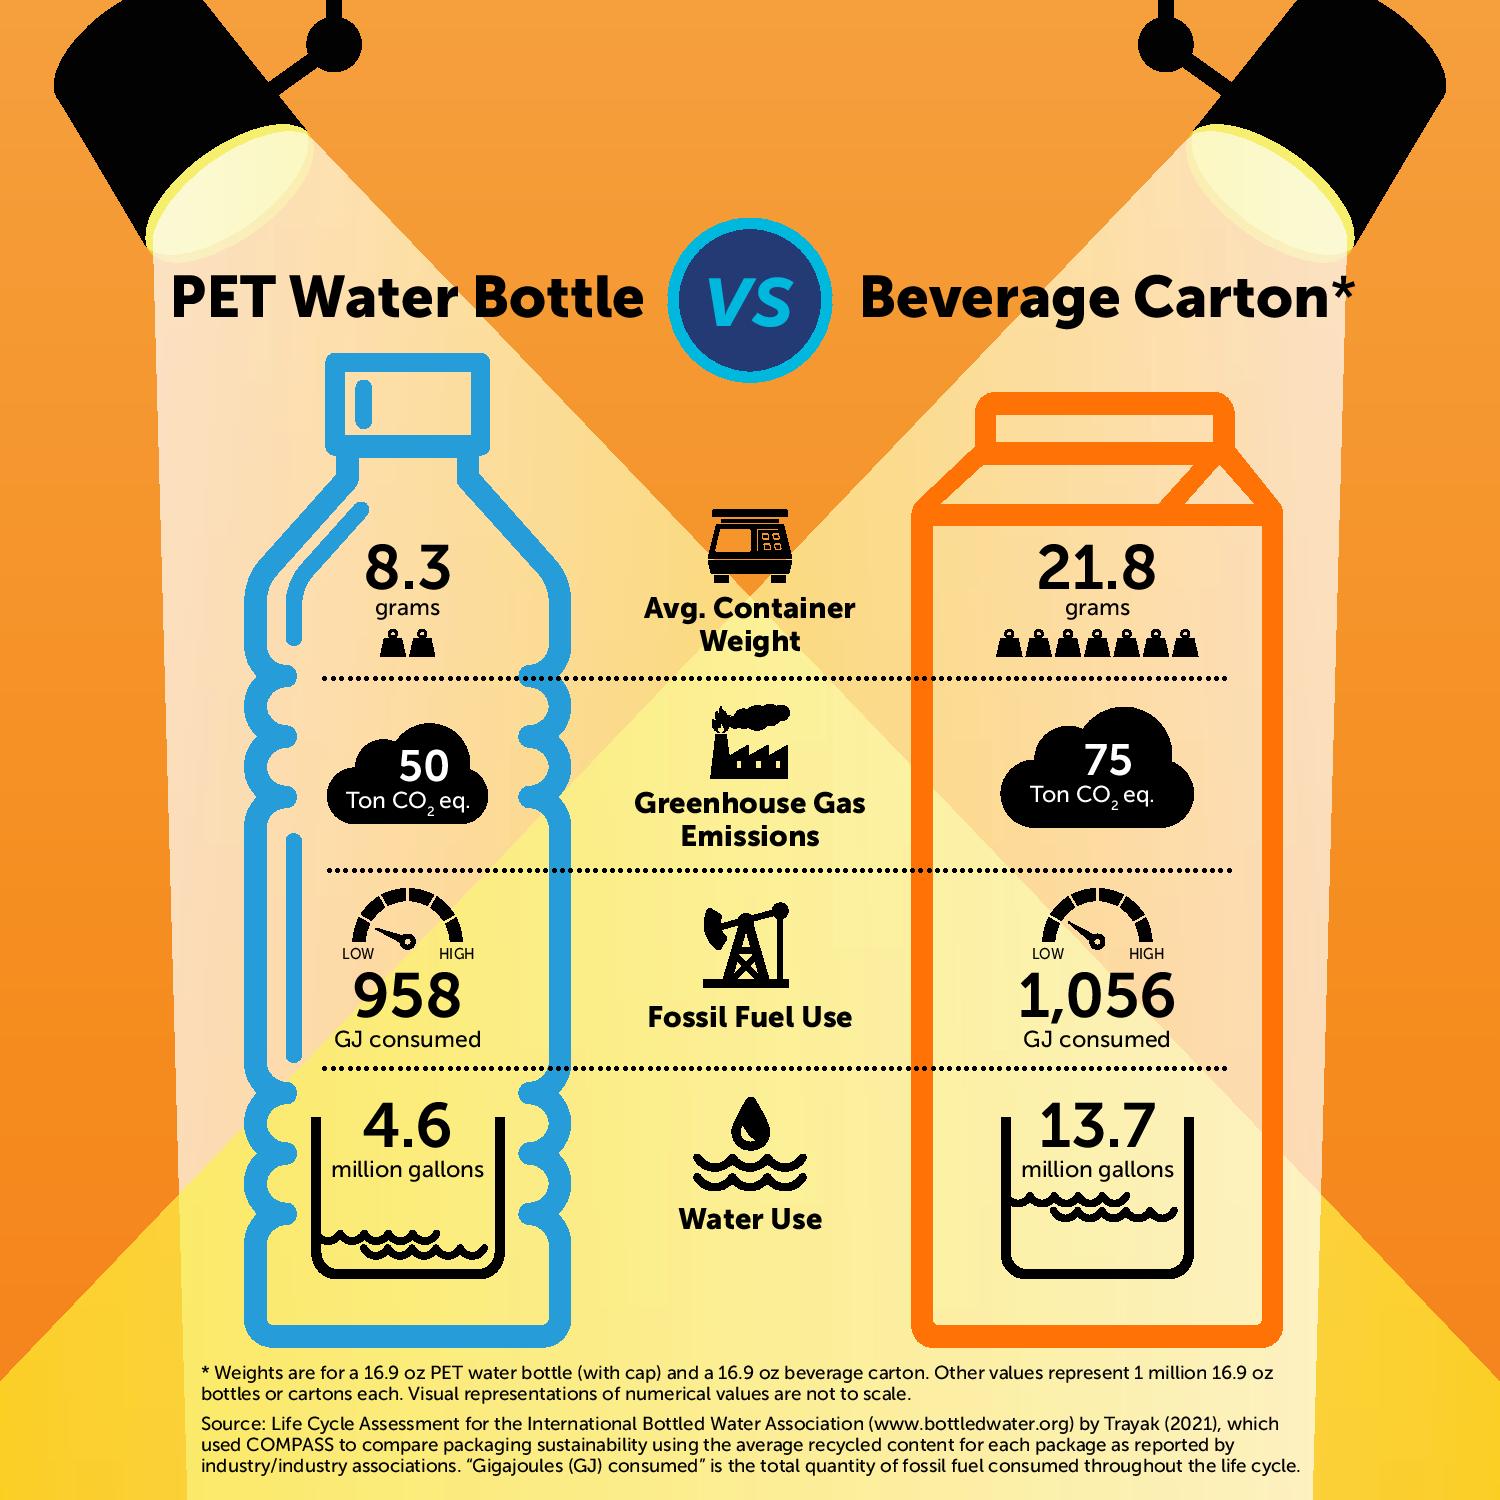 PET Water Bottle vs Beverage Carton